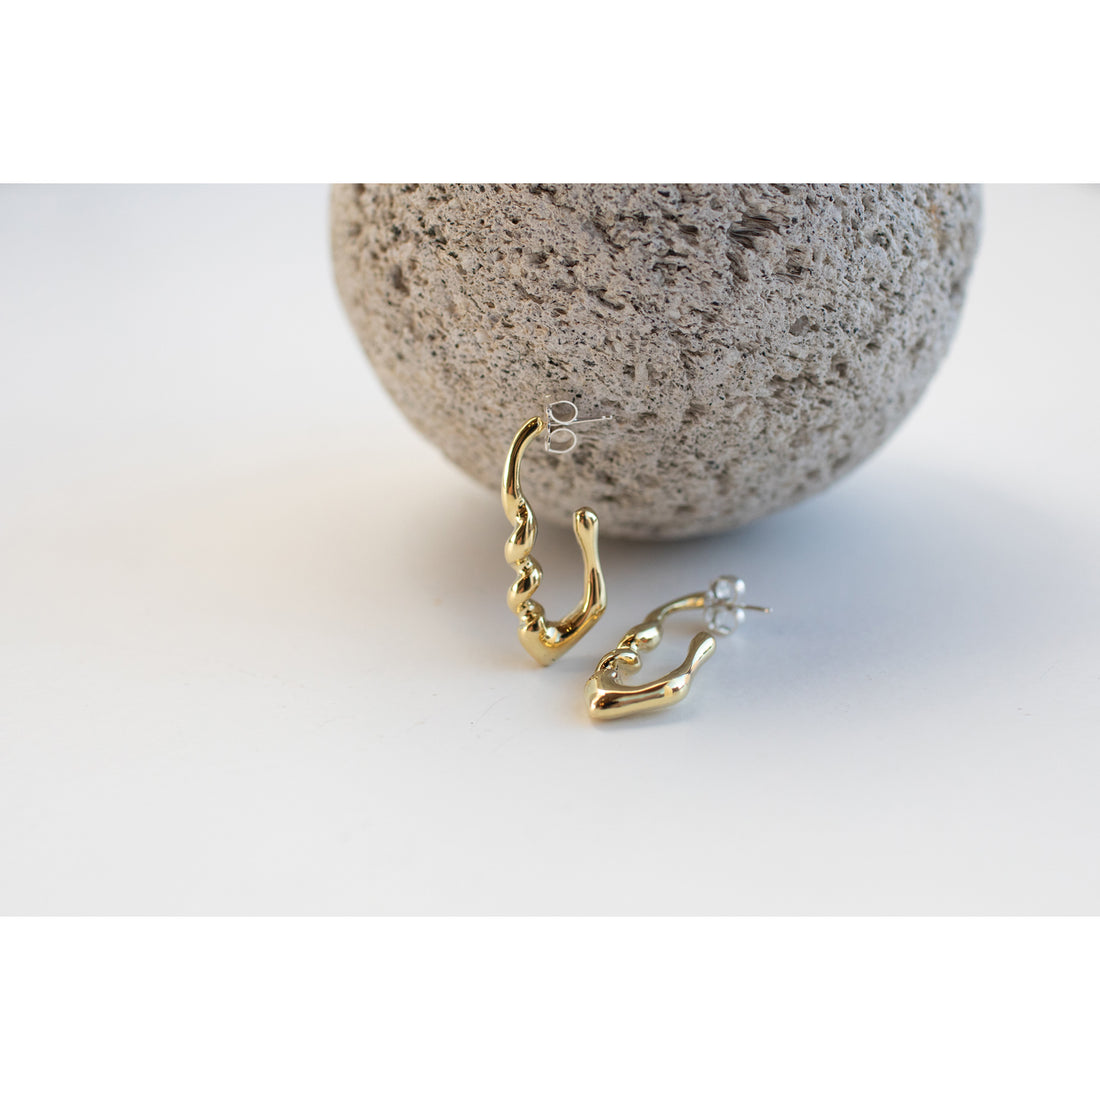 Leigh Miller Small Corkscrew Earrings in Brass